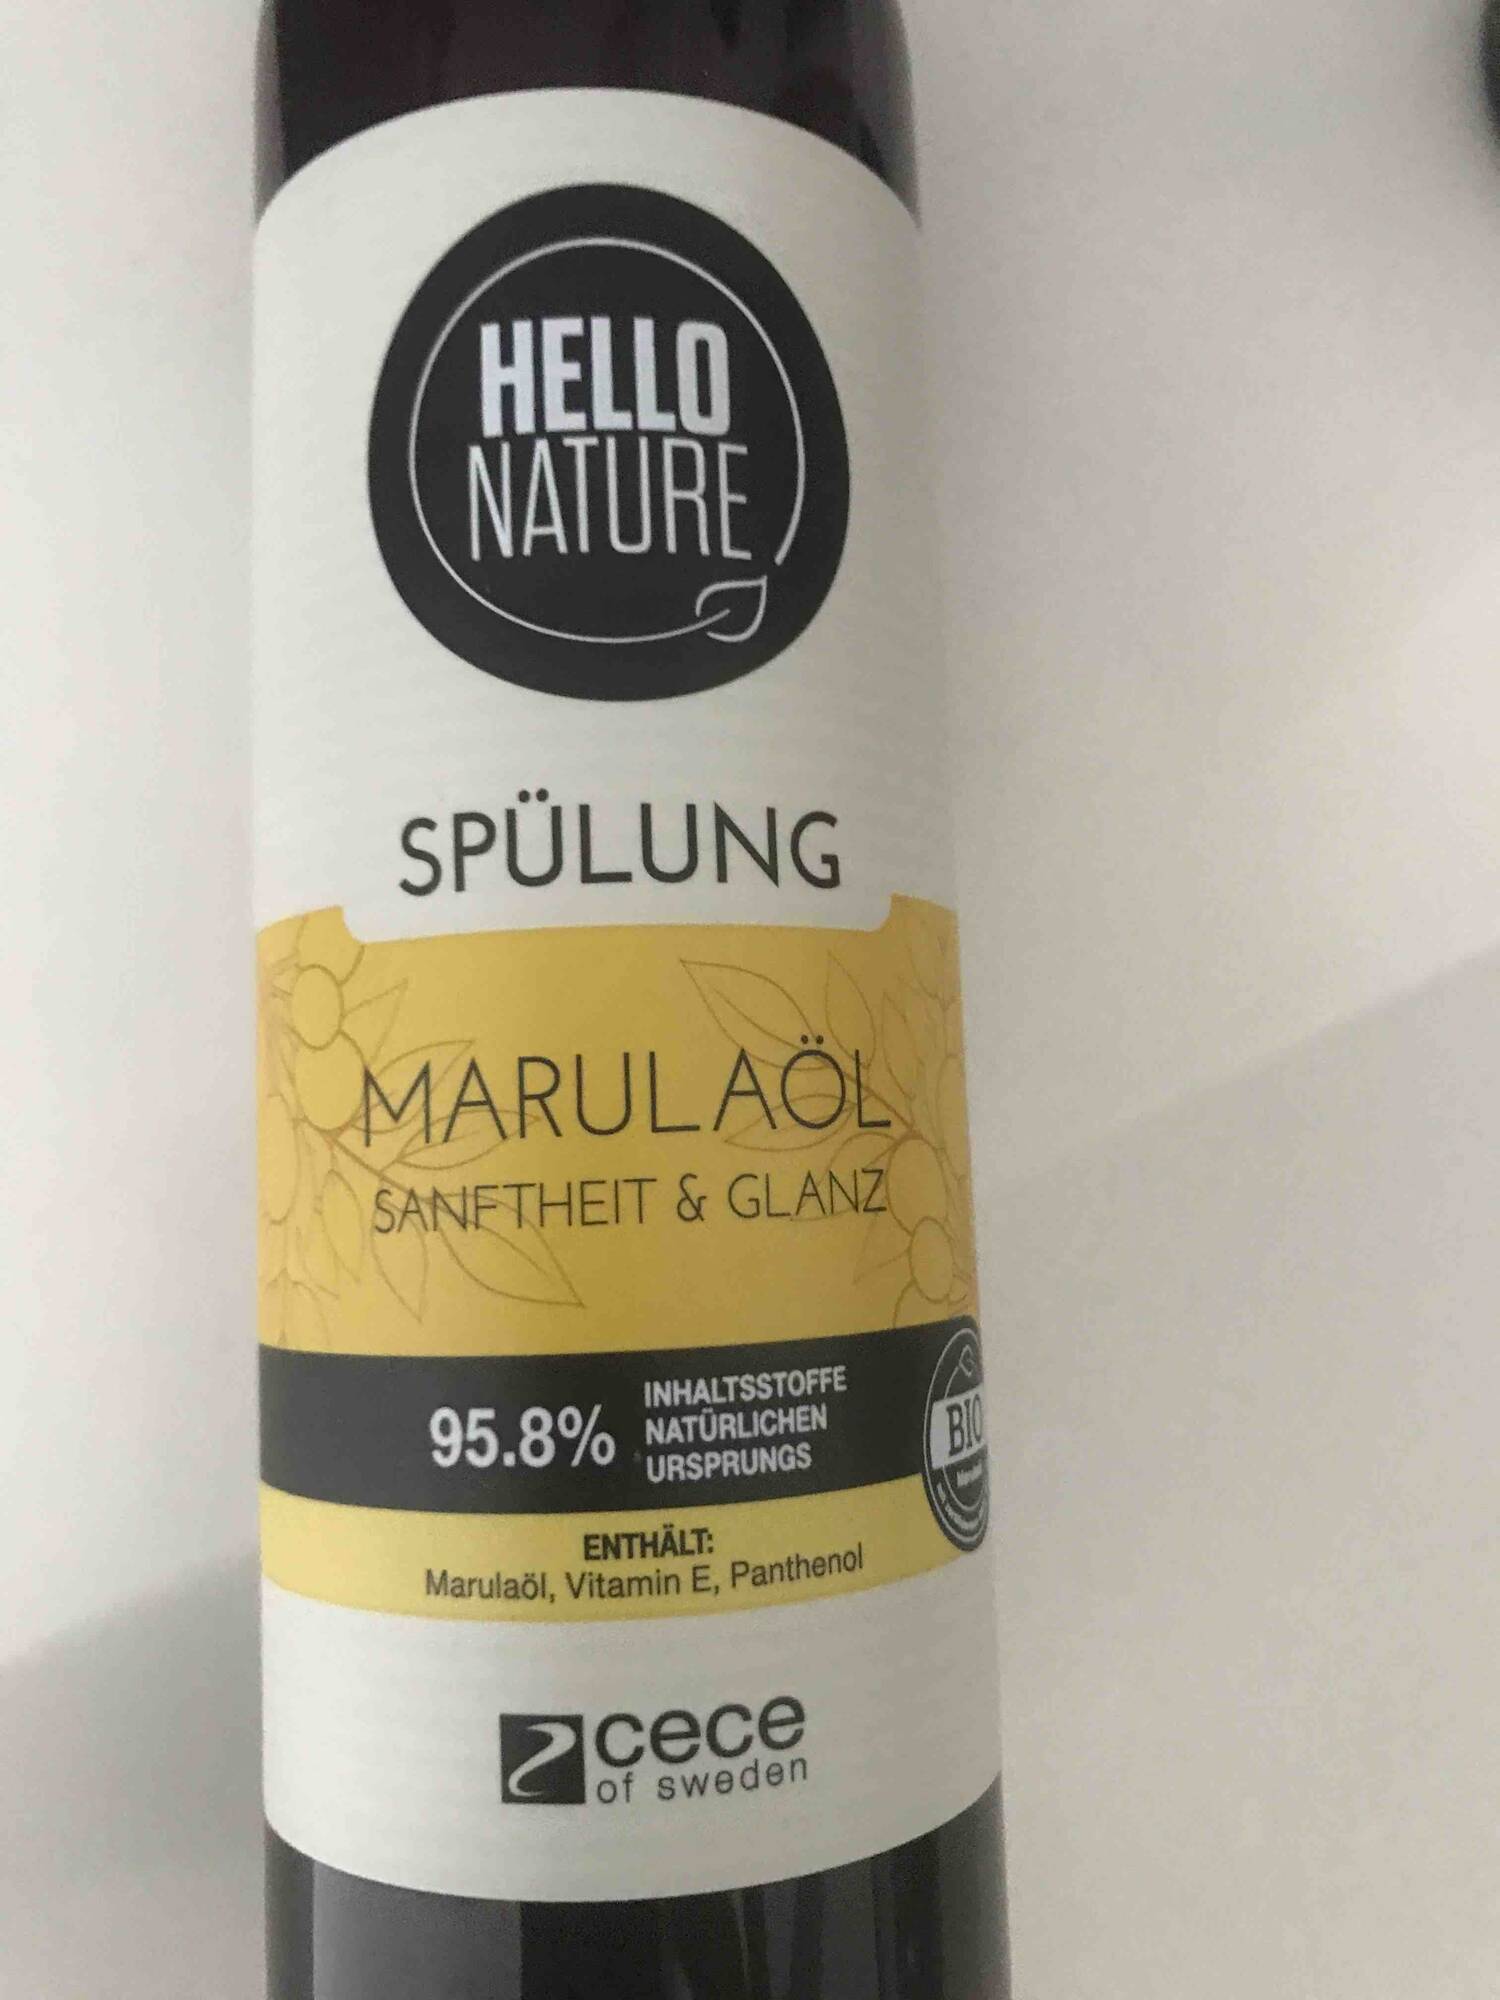 HELLO NATURE - Spülung marulaöl